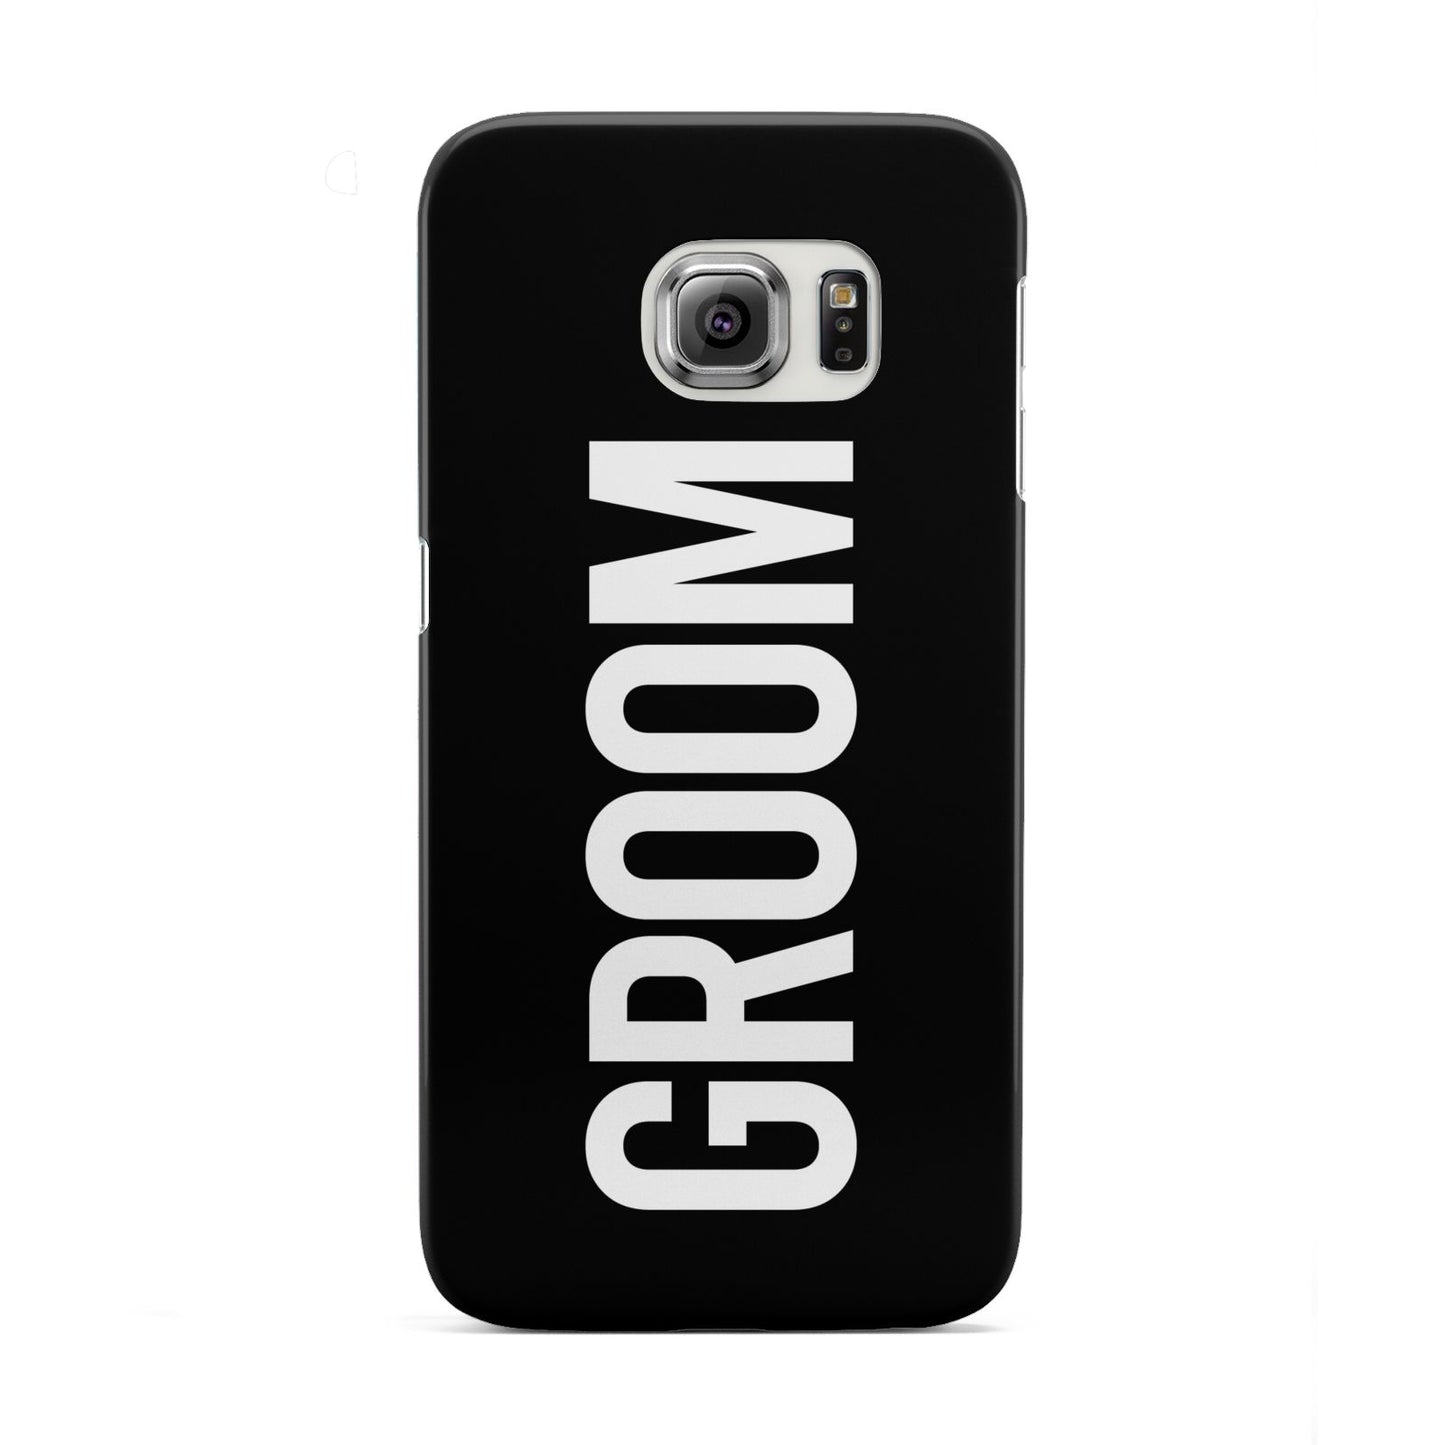 Groom Samsung Galaxy S6 Edge Case